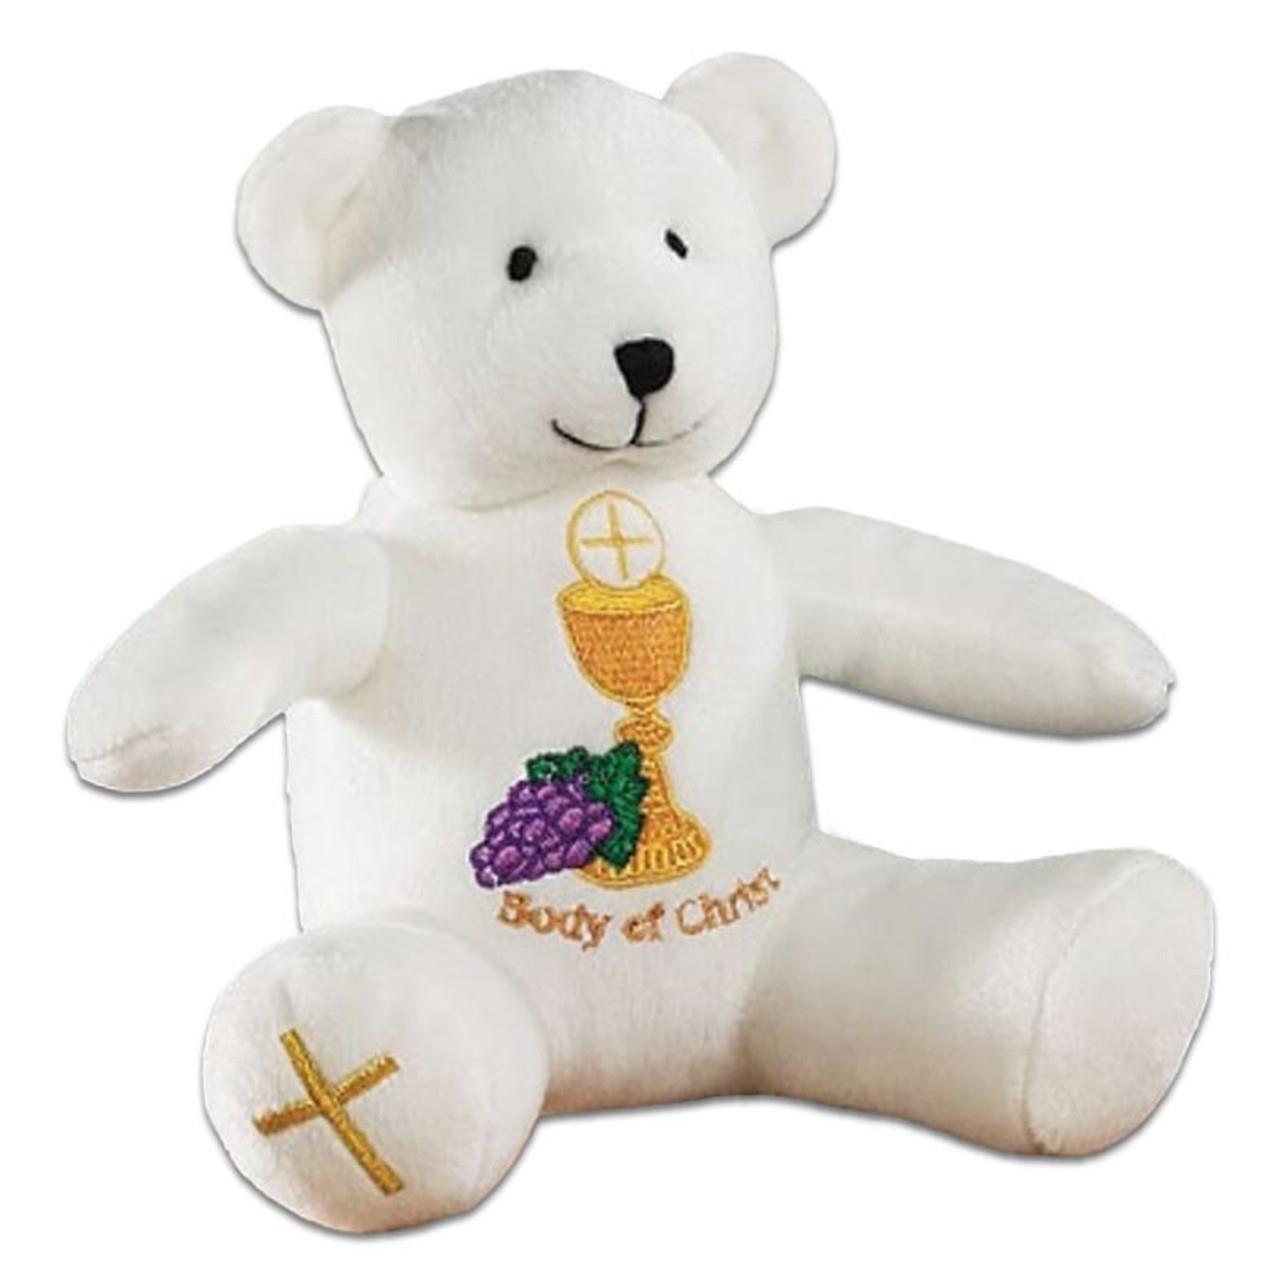 Body of Christ First Communion White Plush Teddy Bear Gift for Children 6 Inch